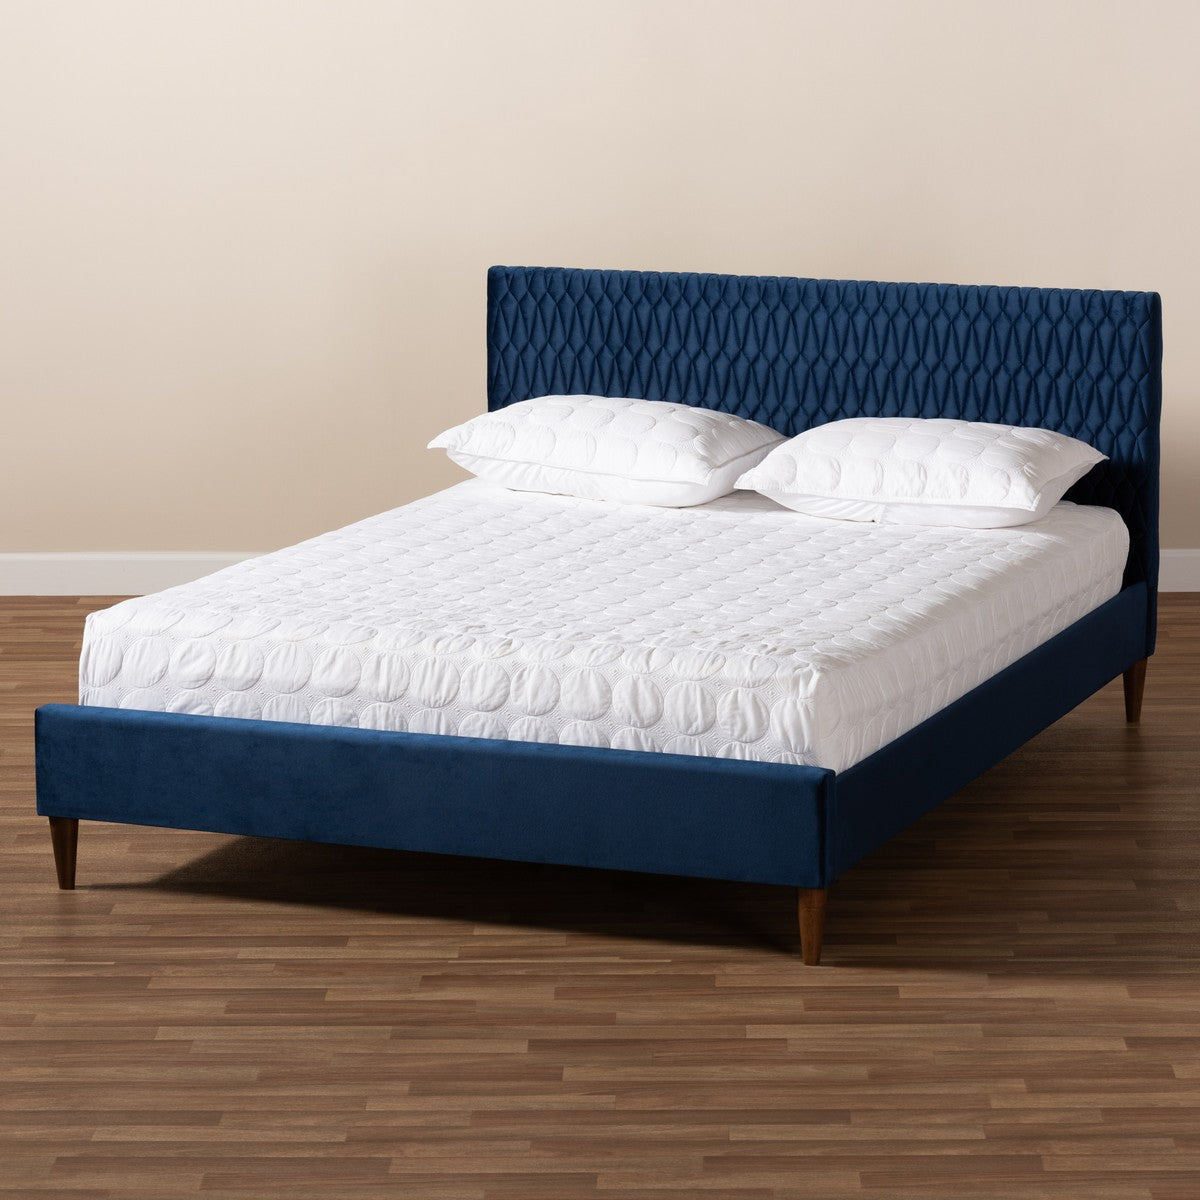 Baxton Studio Frida Glam and Luxe Royal Blue Velvet Fabric Upholstered Full Size Bed